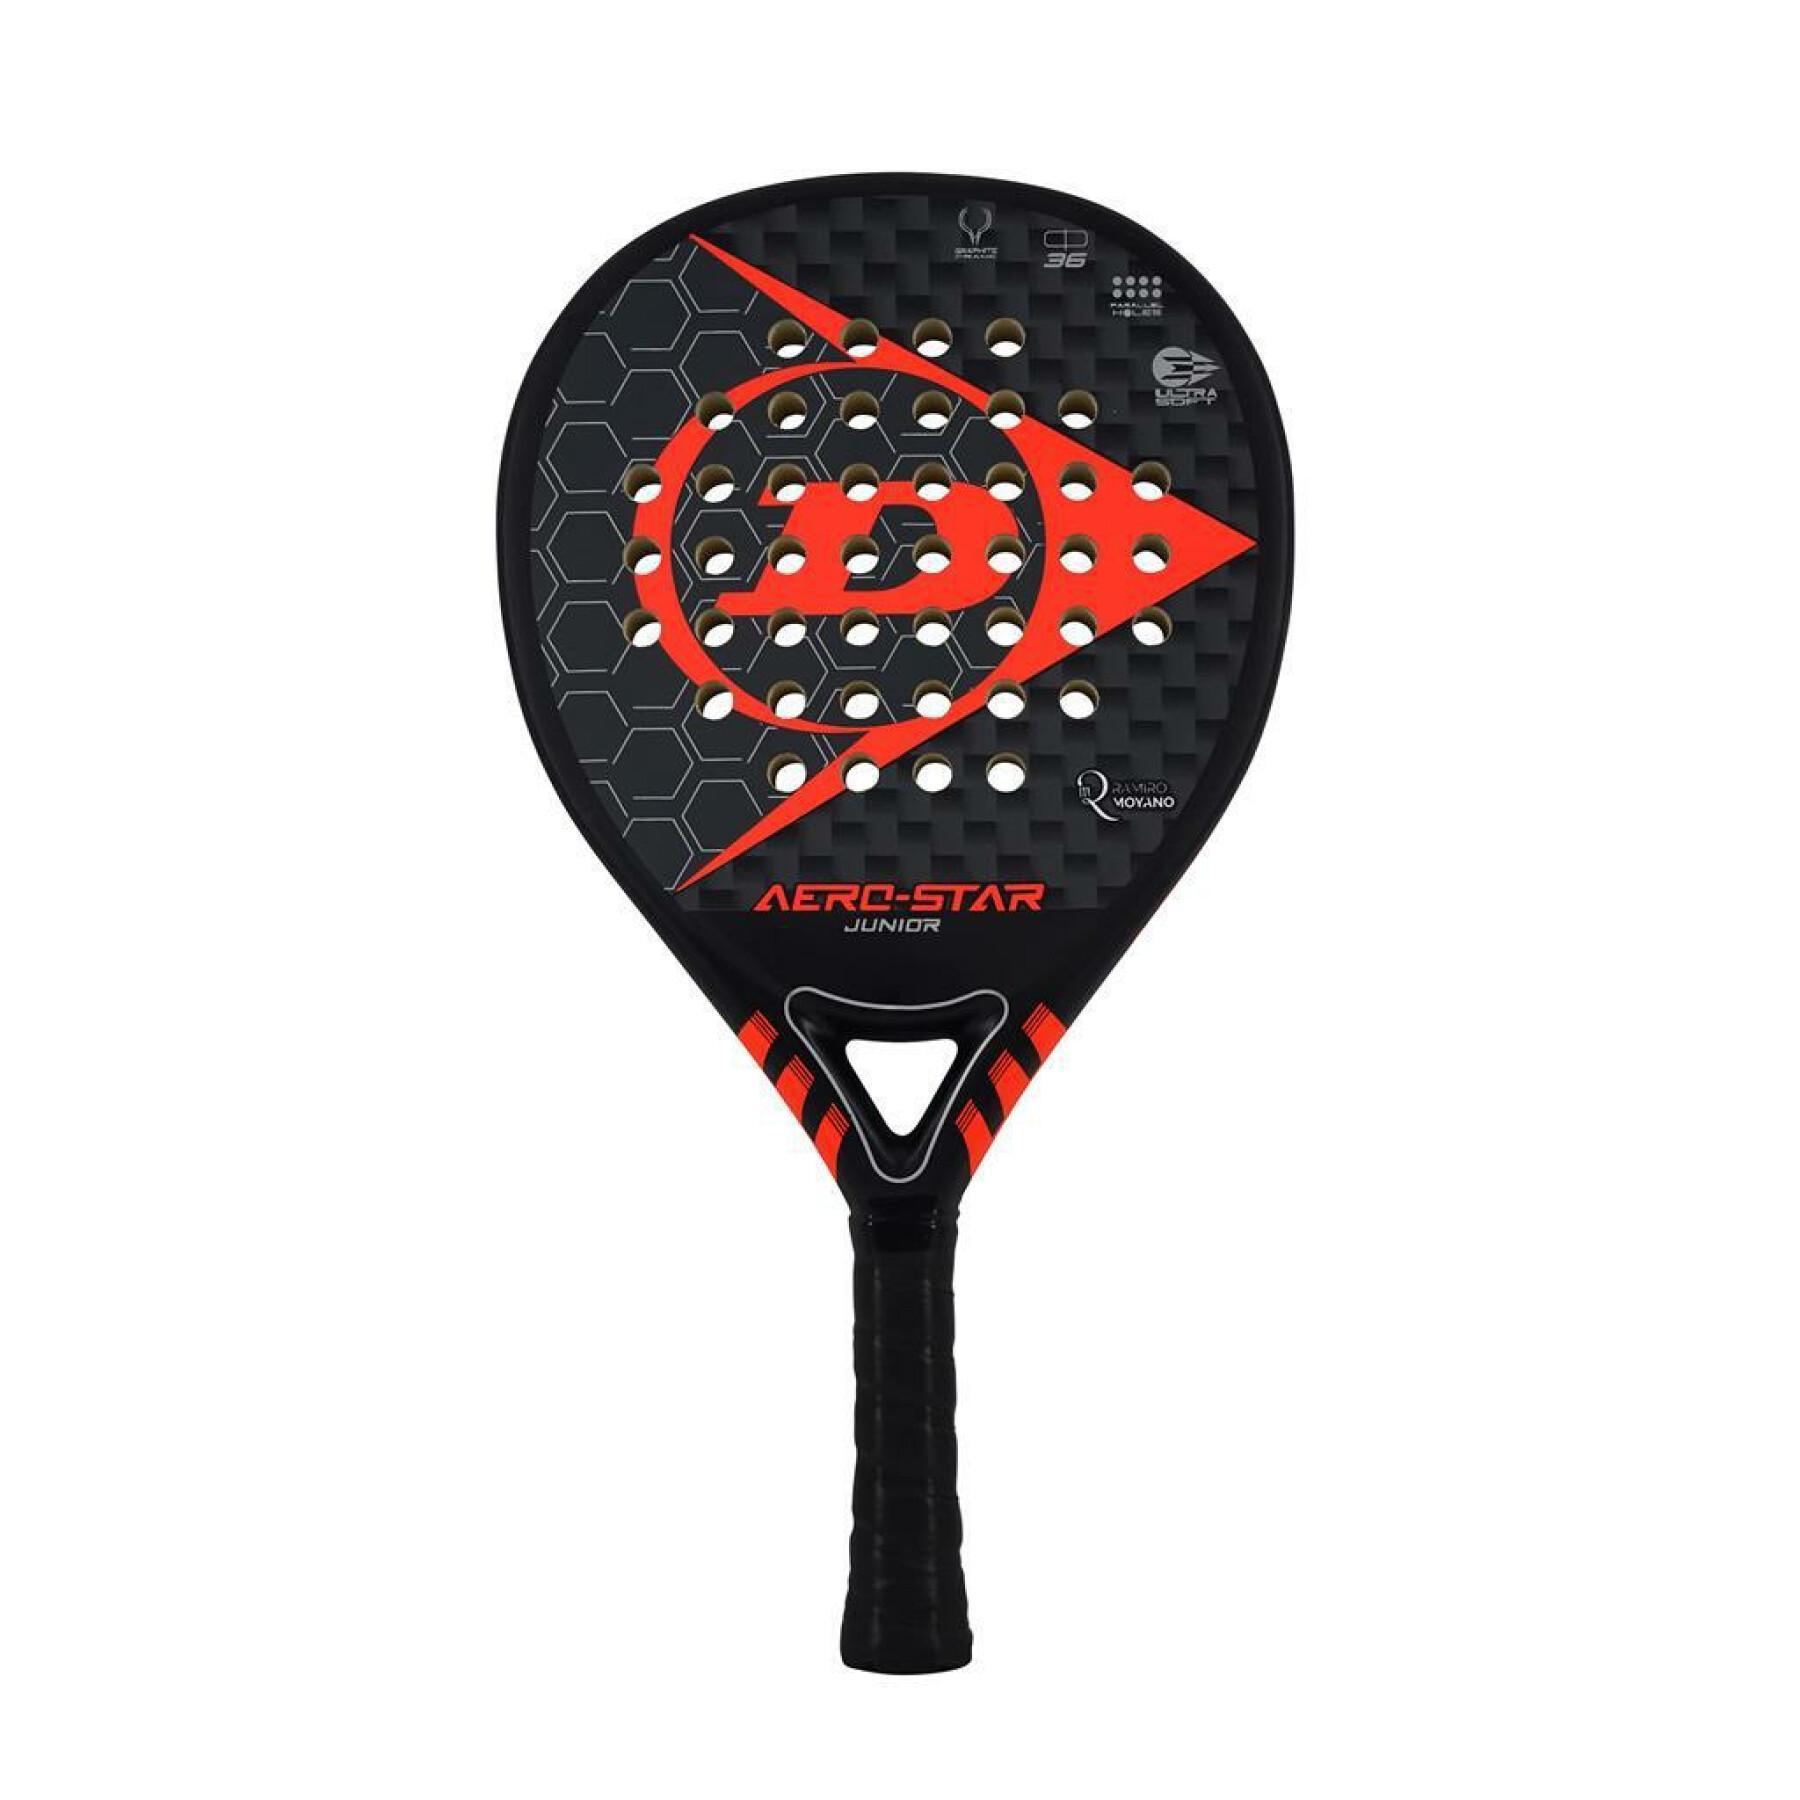 Barnens racket Dunlop aero-star nh